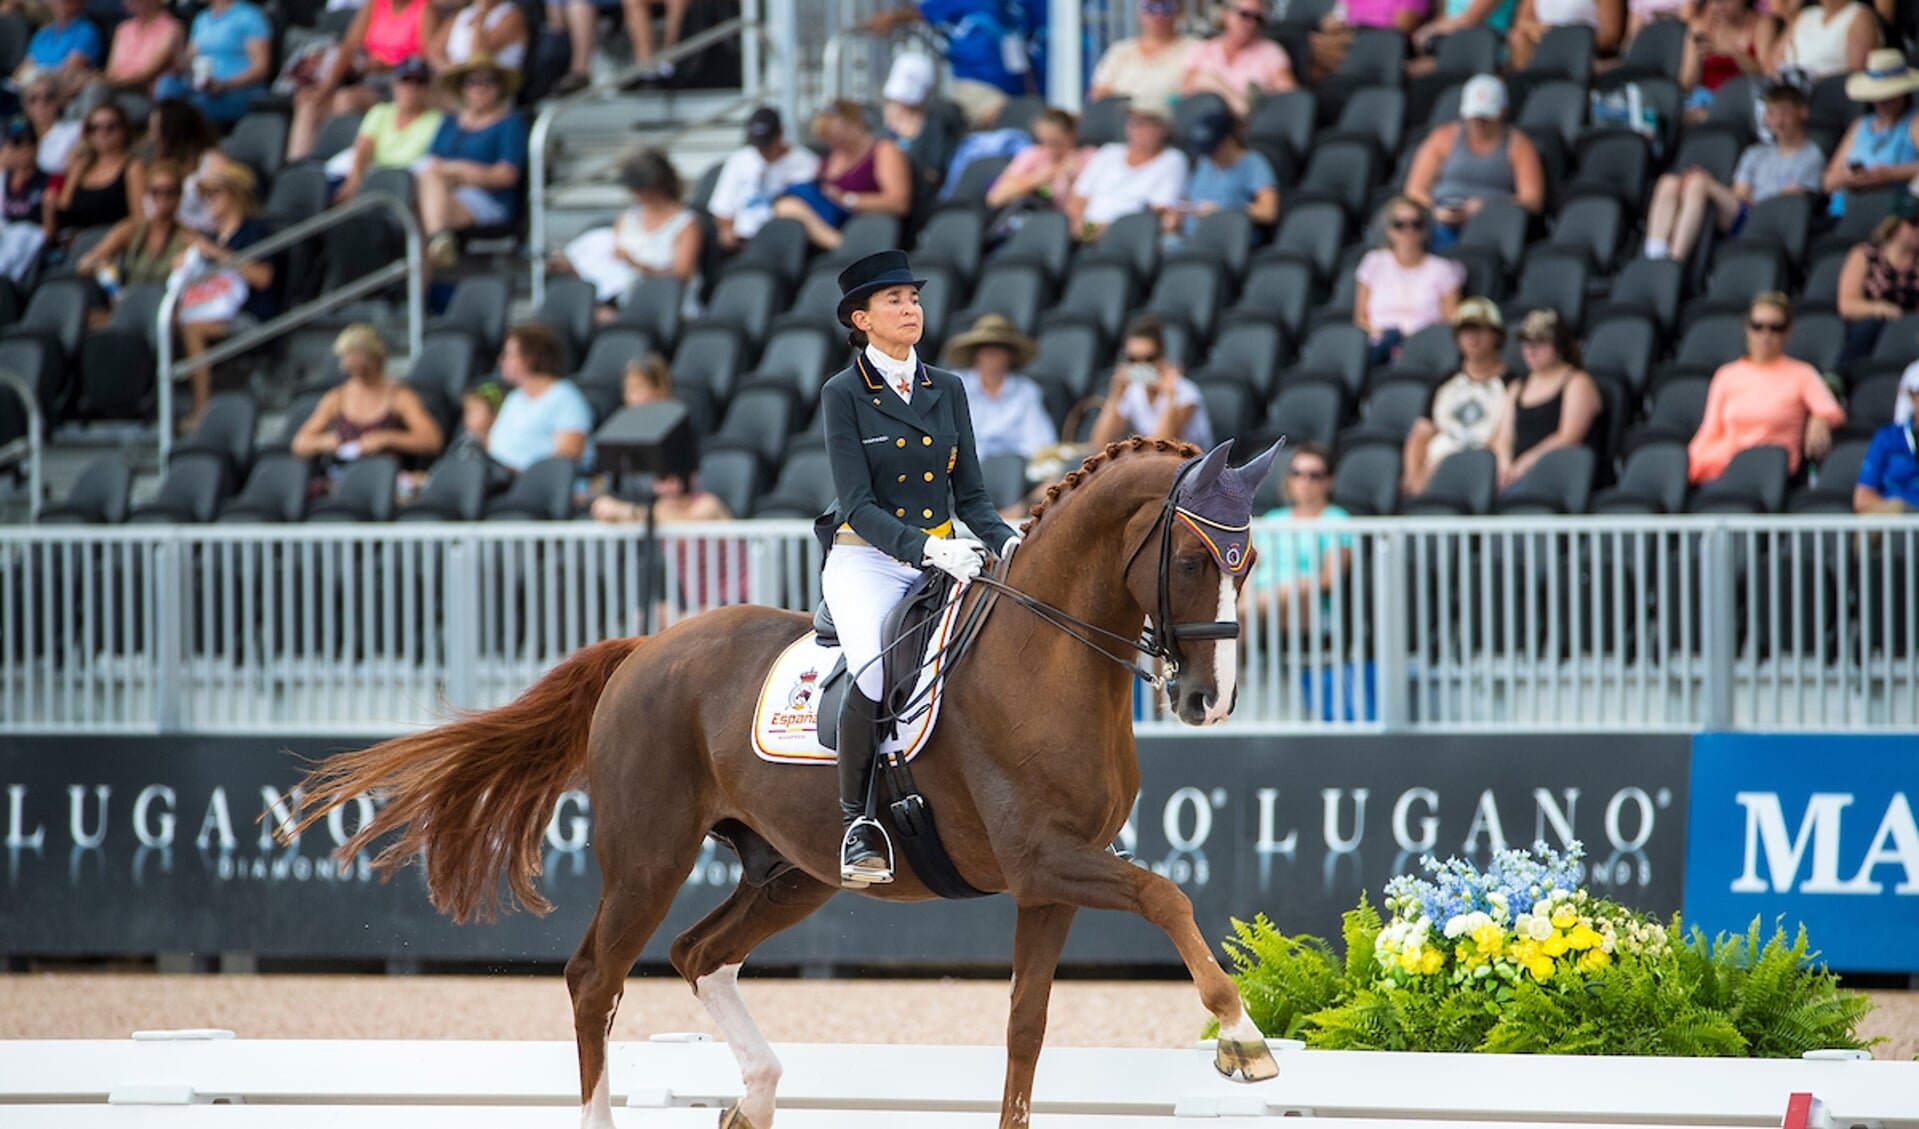 Beatriz Ferrer Salat - Delgado
FEI World Equestrian Games Tryon 2018
© DigiShots